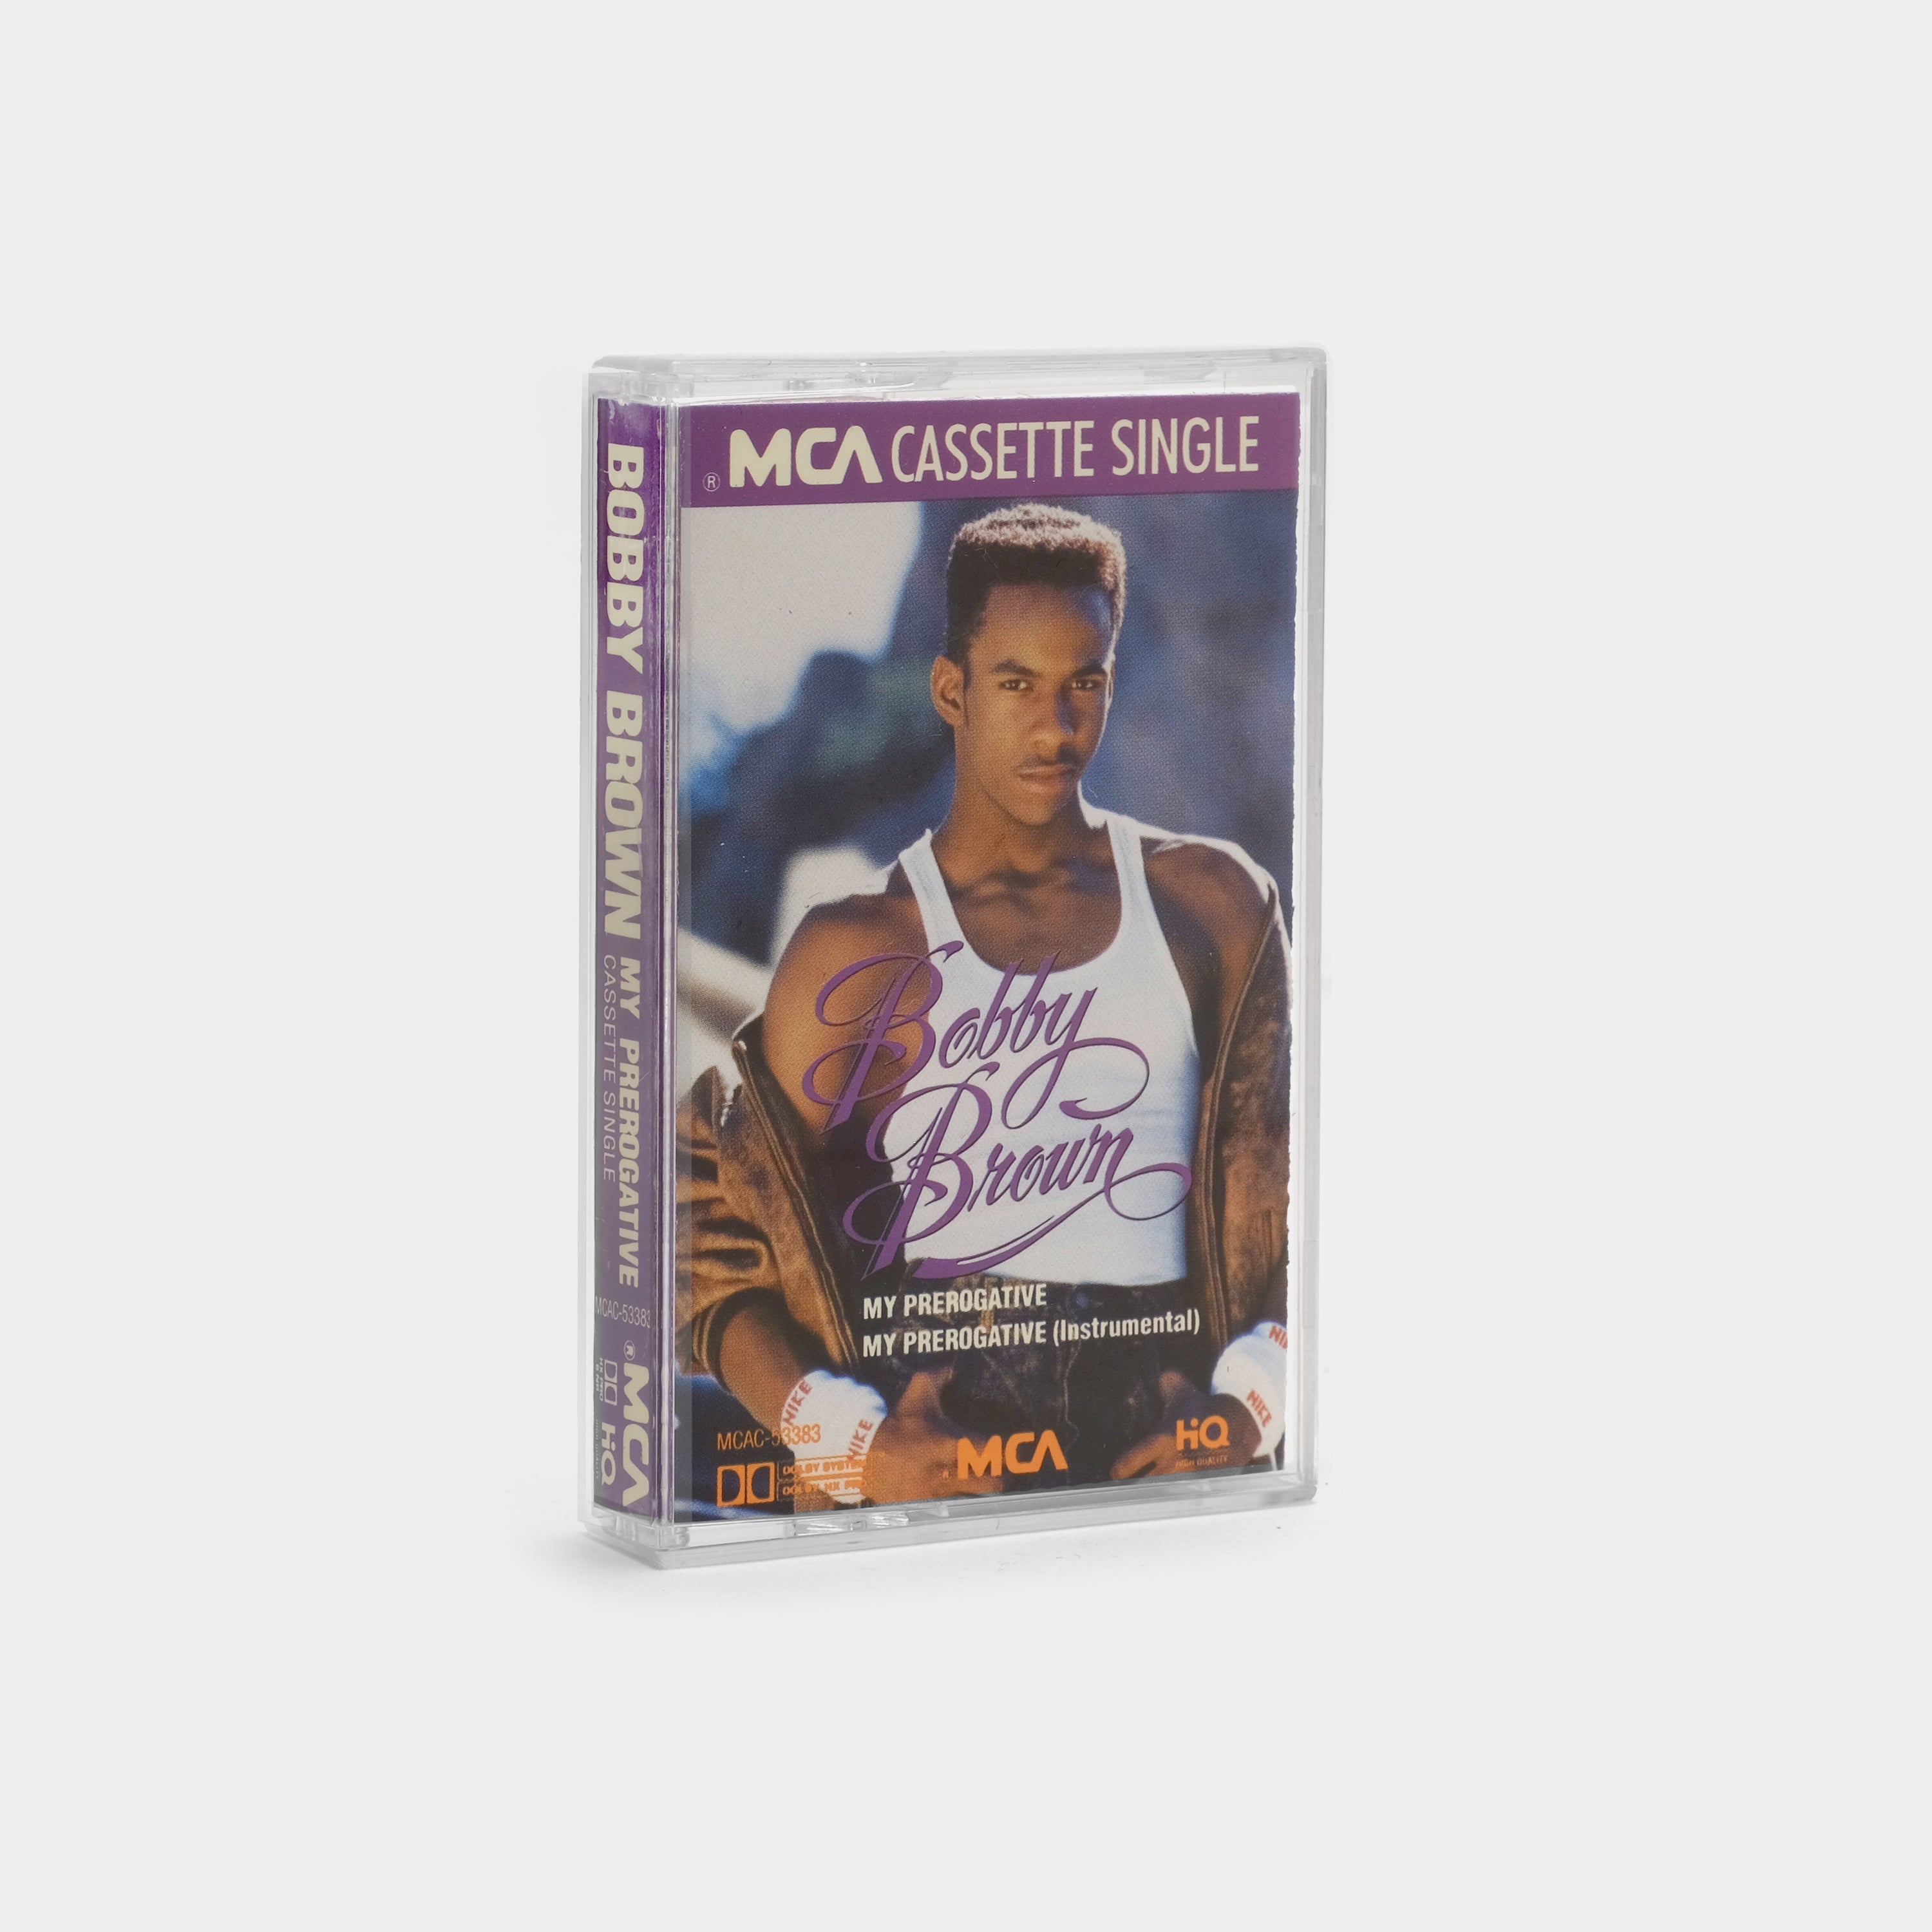 Bobby Brown - My Prerogative Cassette Tape